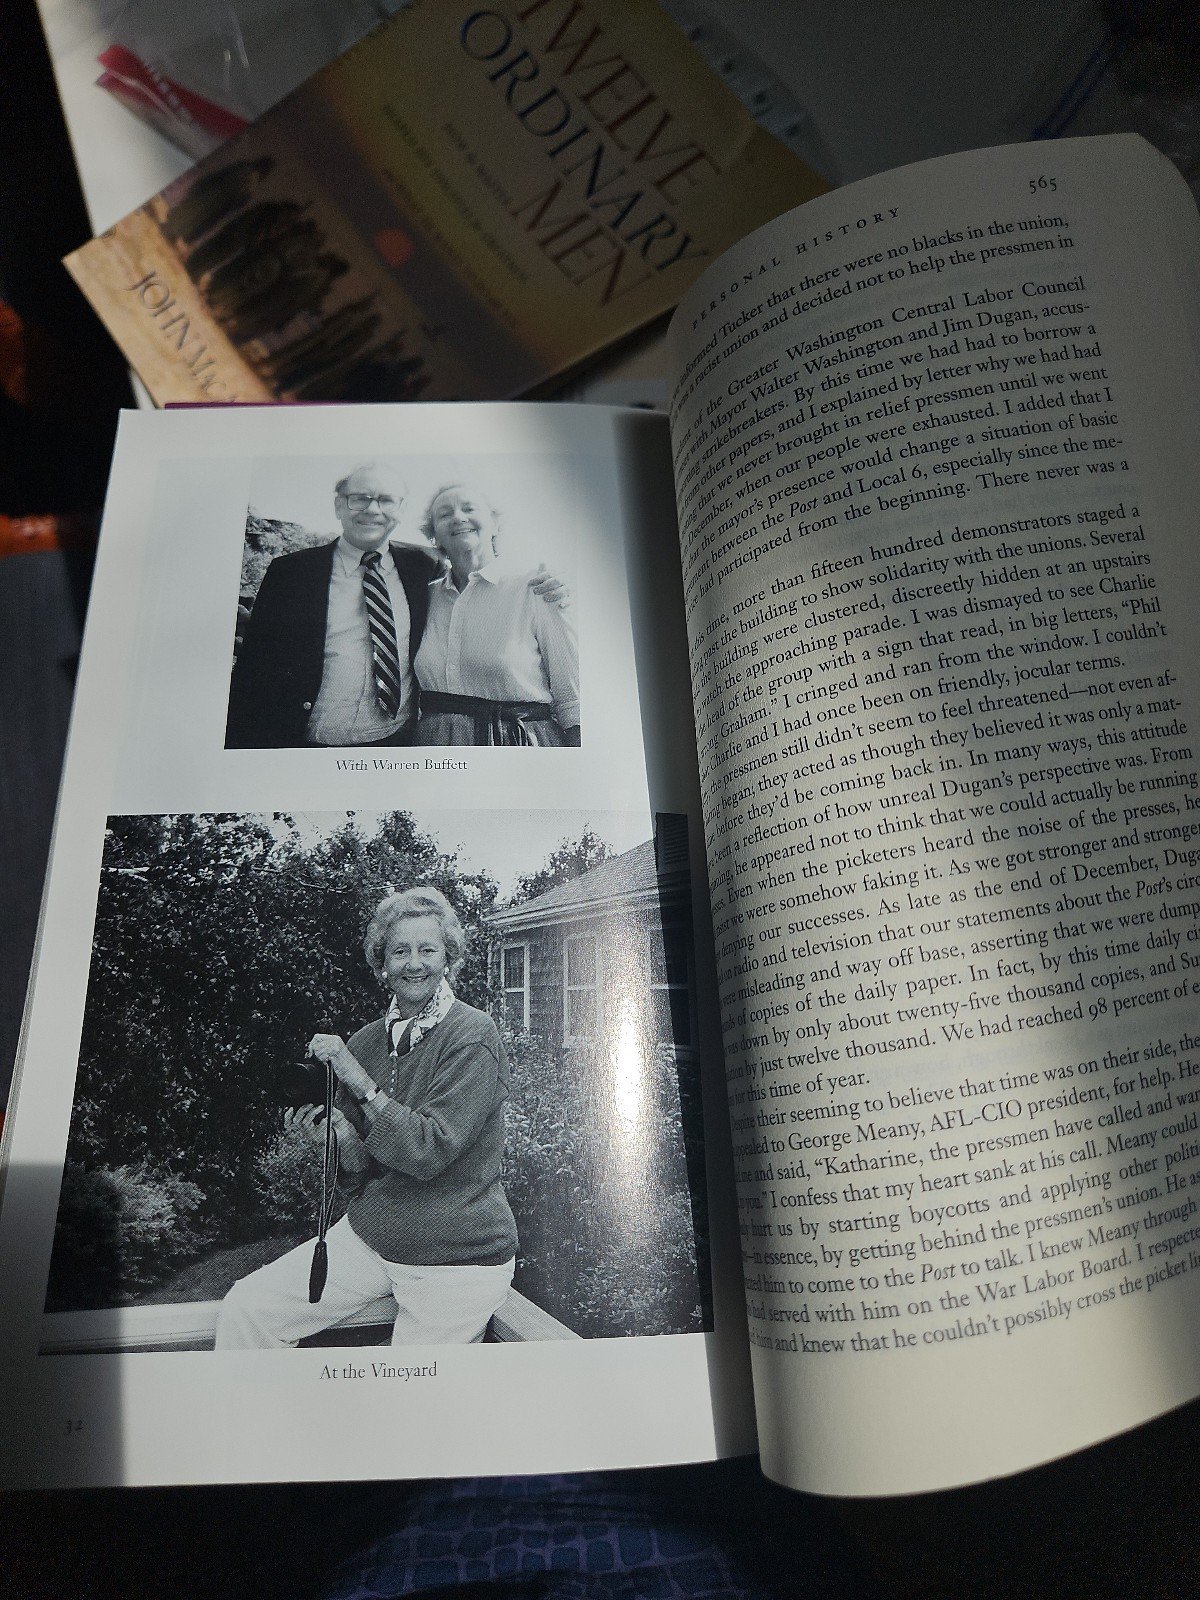 Katherine Graham personal history book knoff paperback fuS4zIj22